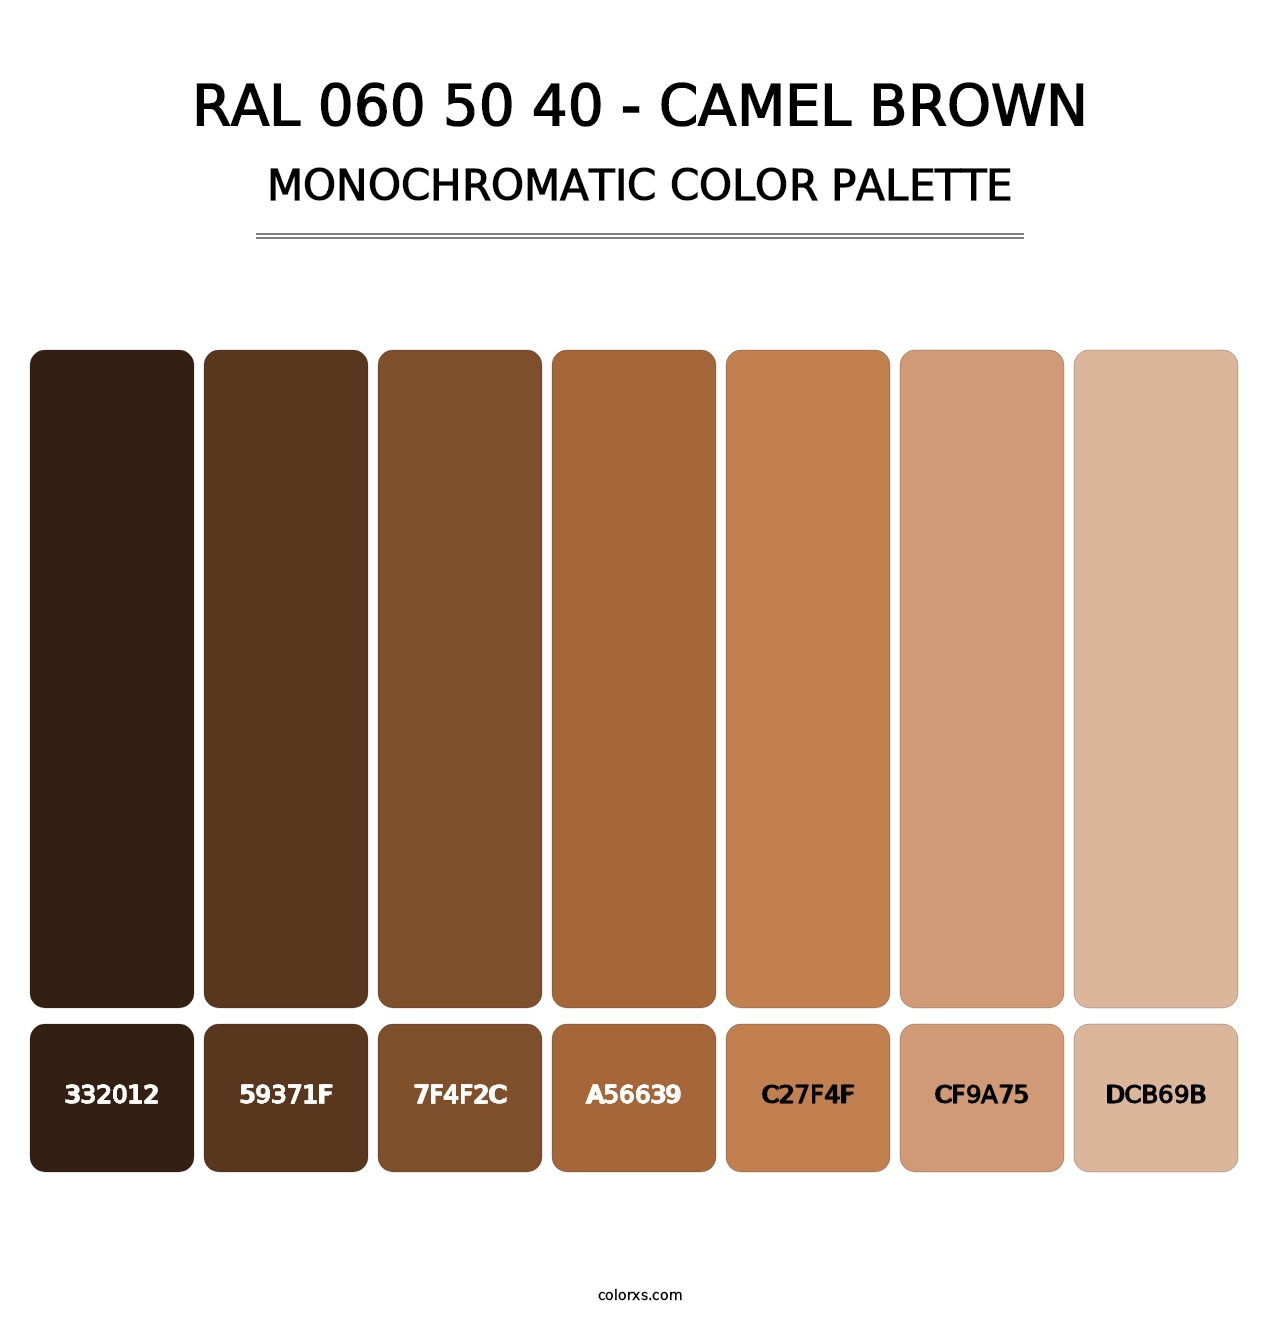 RAL 060 50 40 - Camel Brown - Monochromatic Color Palette